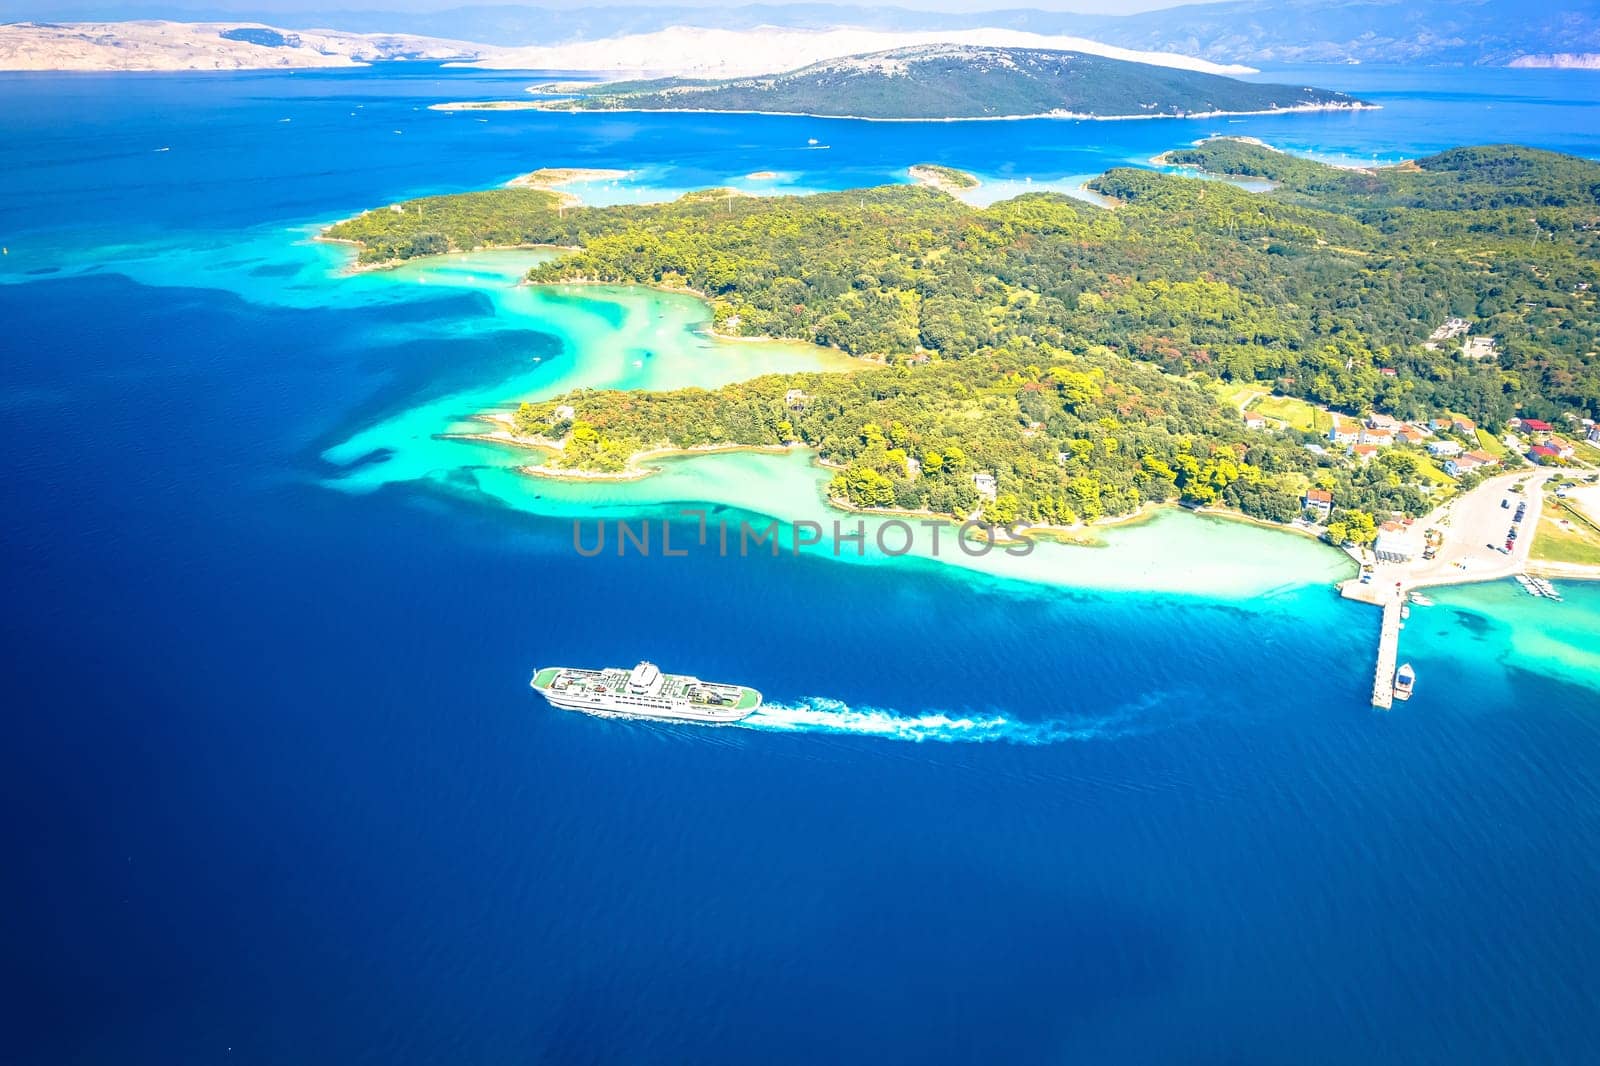 Lopar on Rab island and ferry on the sea aerial view, archipelago of Croatia